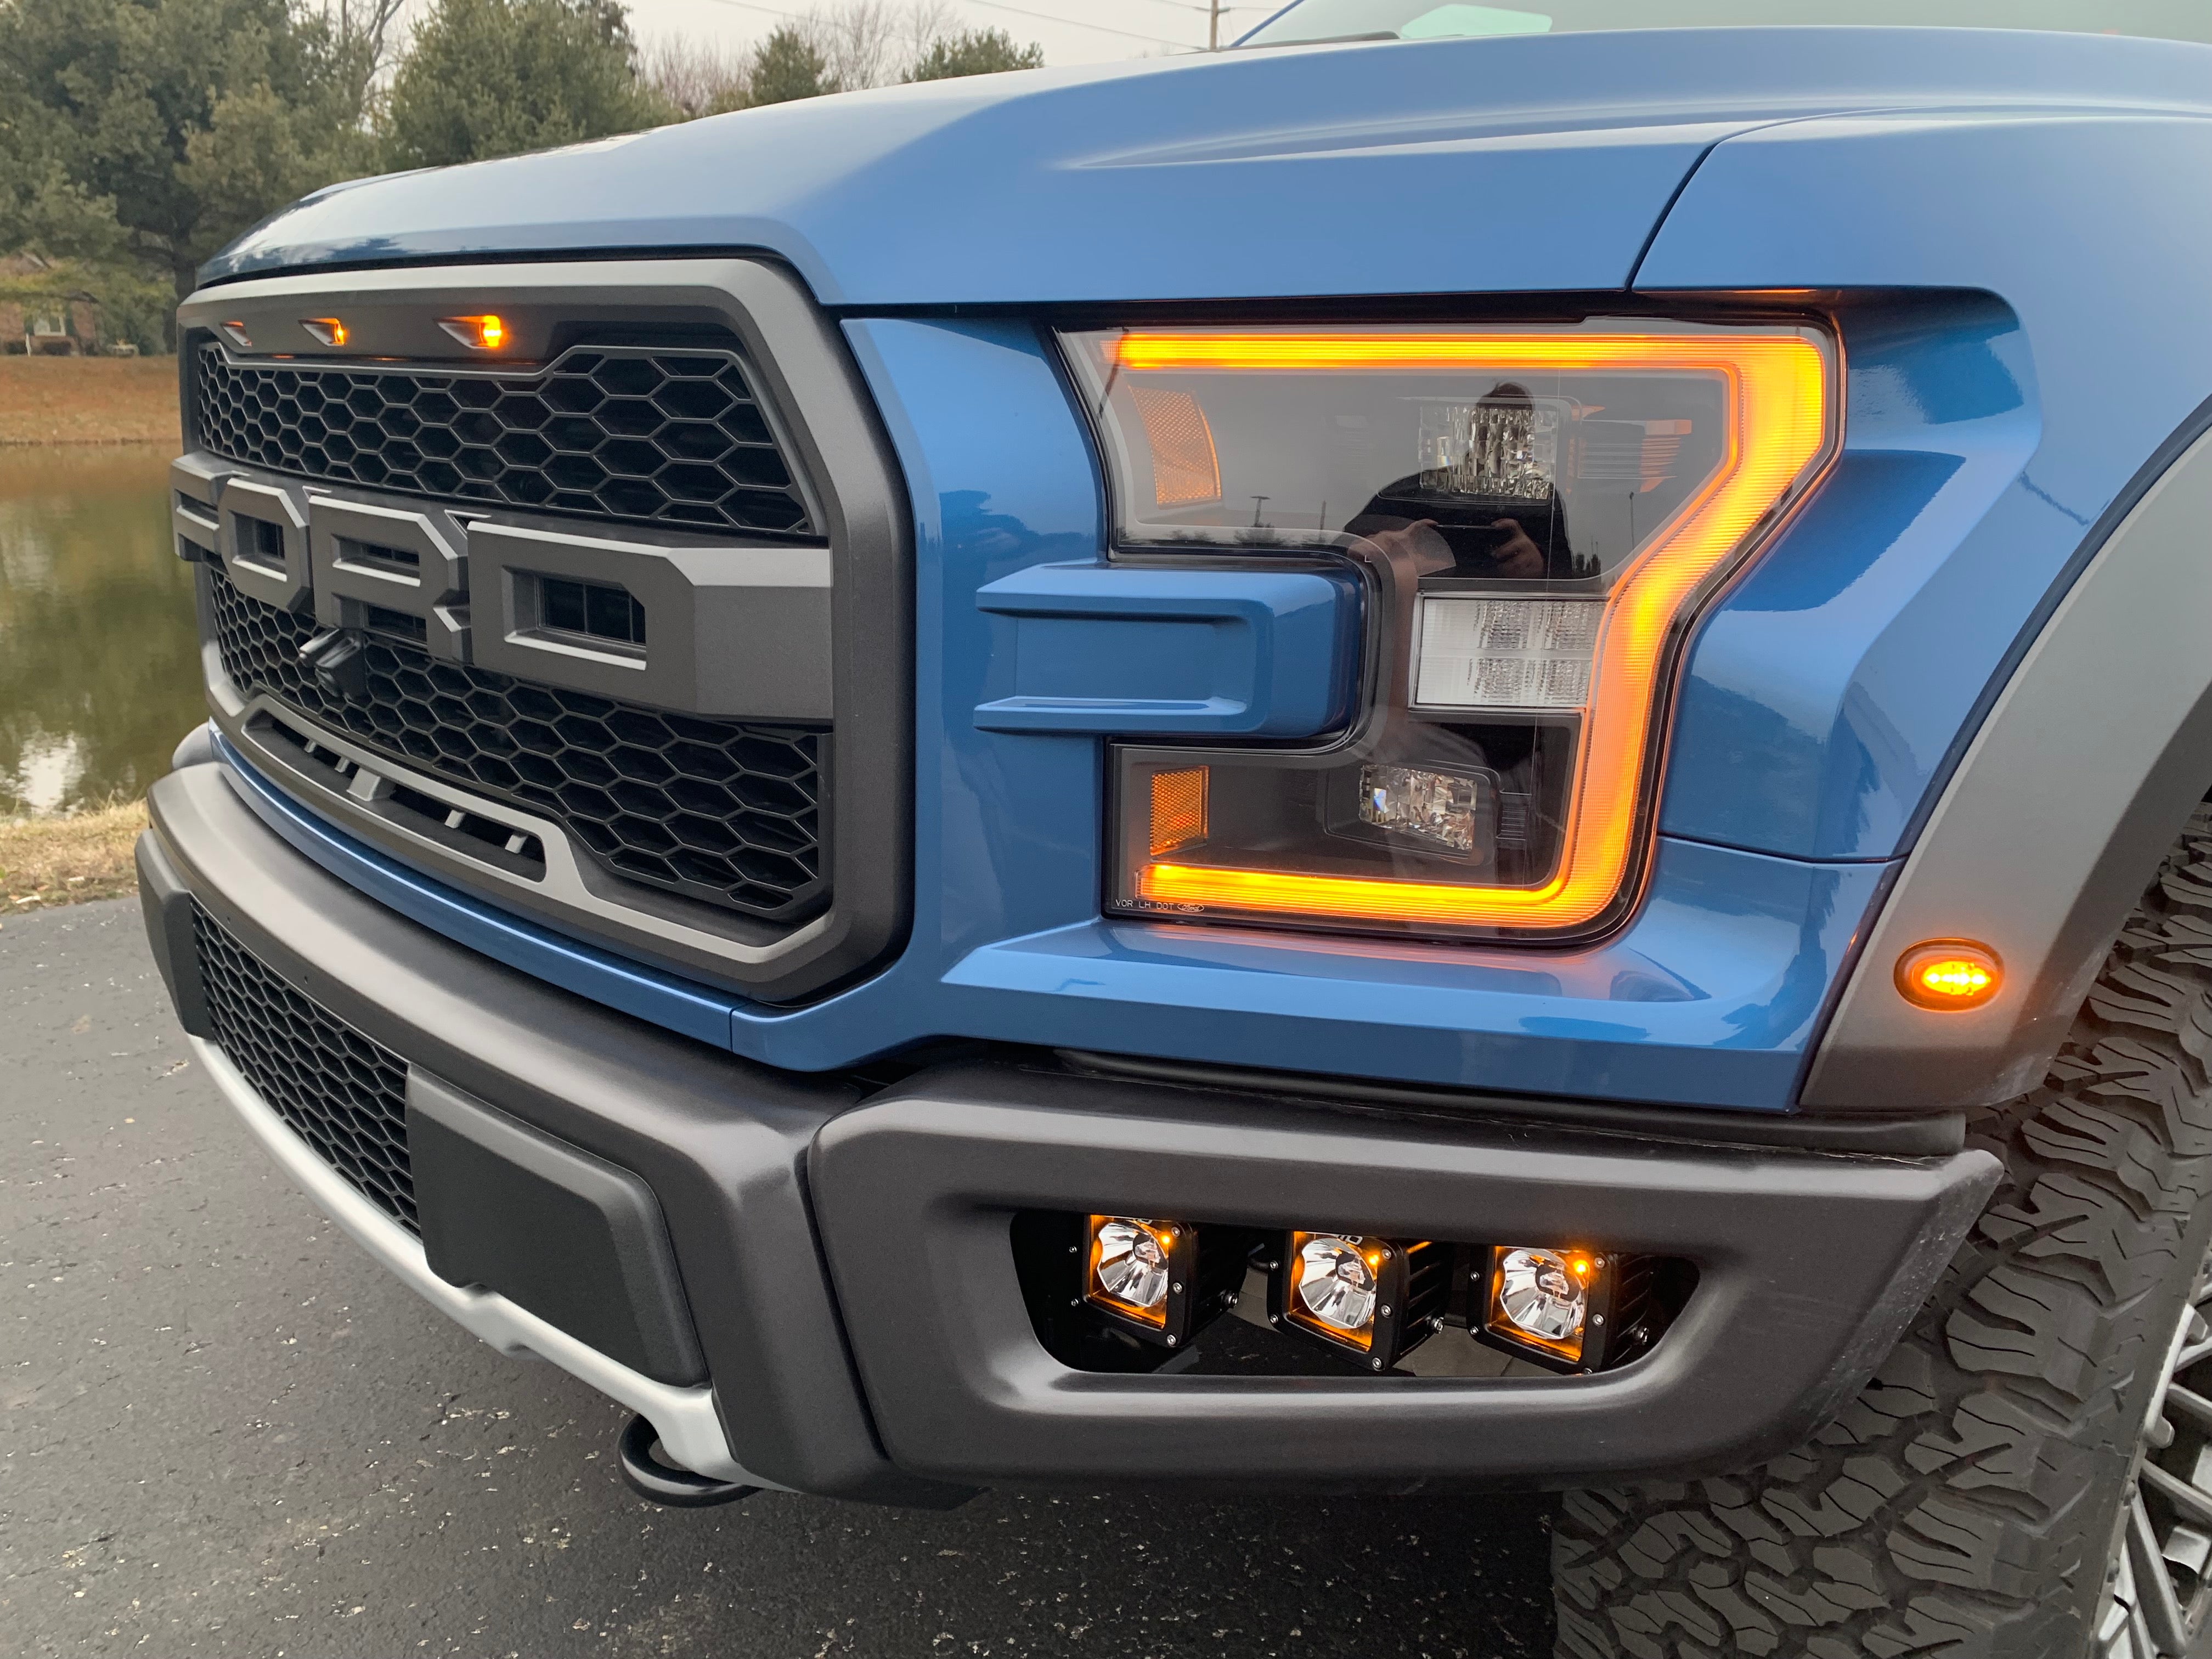 SPECIAL BUY - SPV Parts 2017-2020 Ford F-150 Raptor - Rigid Radiance/Scene Fog Amber LED Triple Fog Light Kit Including Brackets (20204 & 68204)